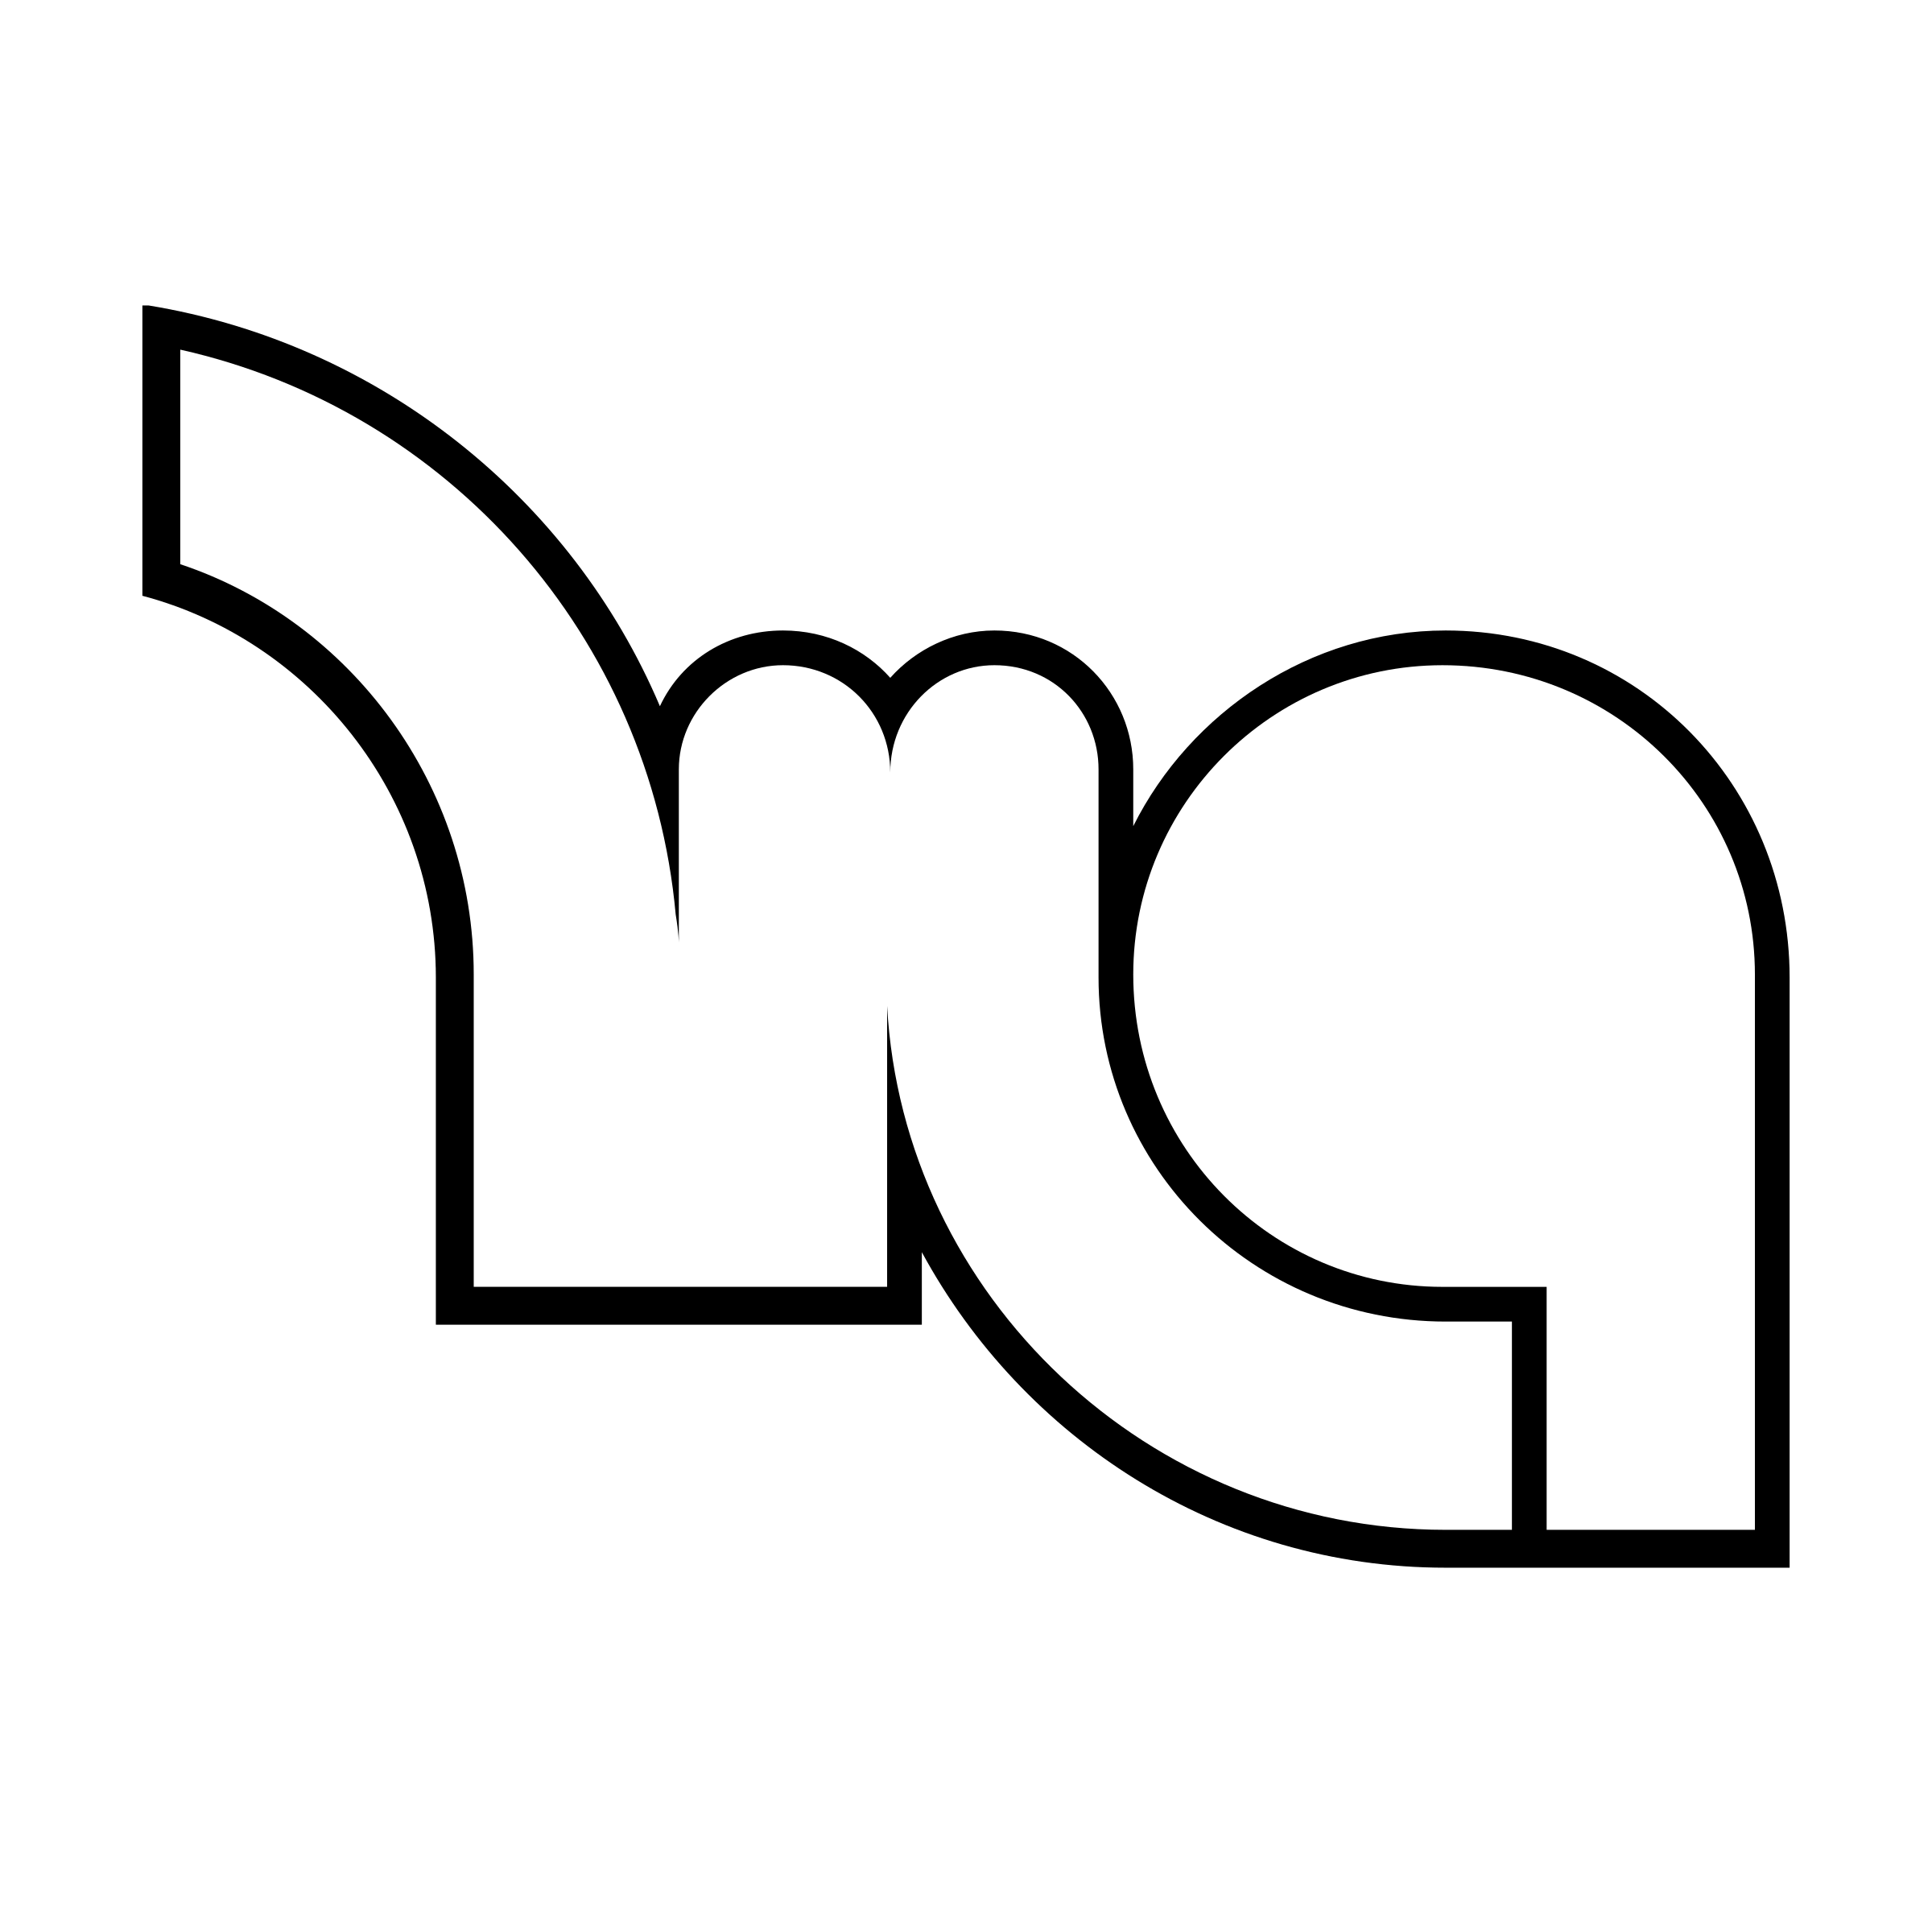 MQ Logo - MQ Logo PNG Transparent & SVG Vector - Freebie Supply